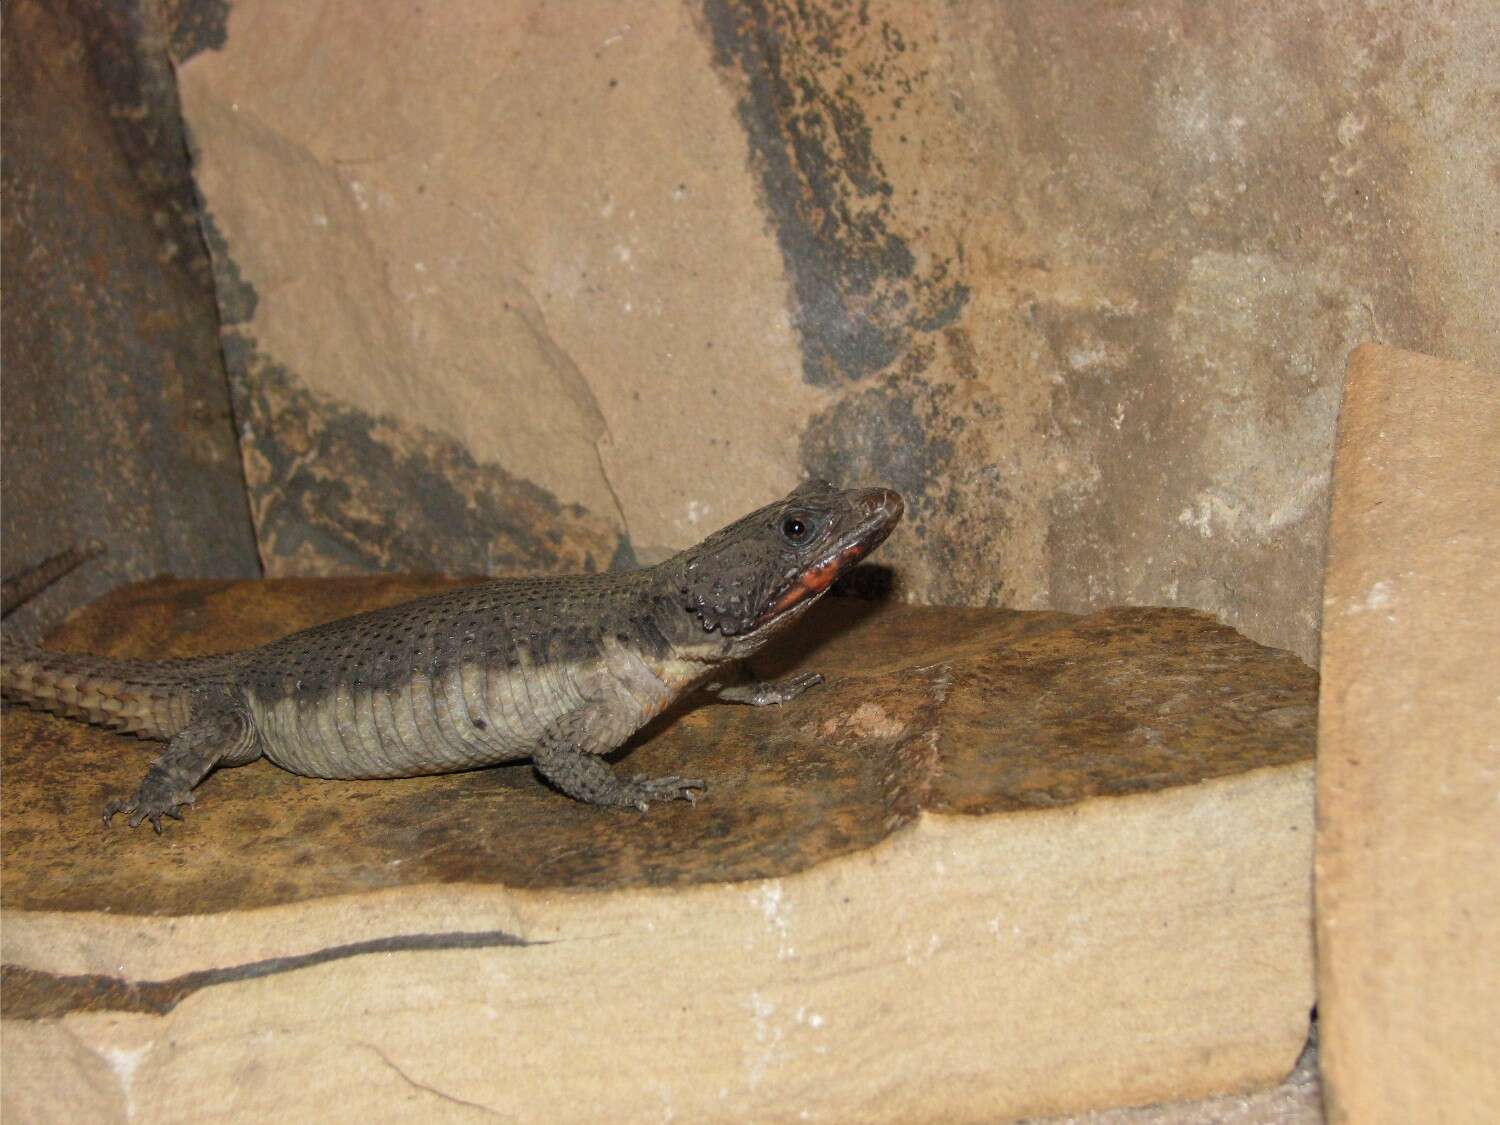 Image of Mozambique girdled lizard